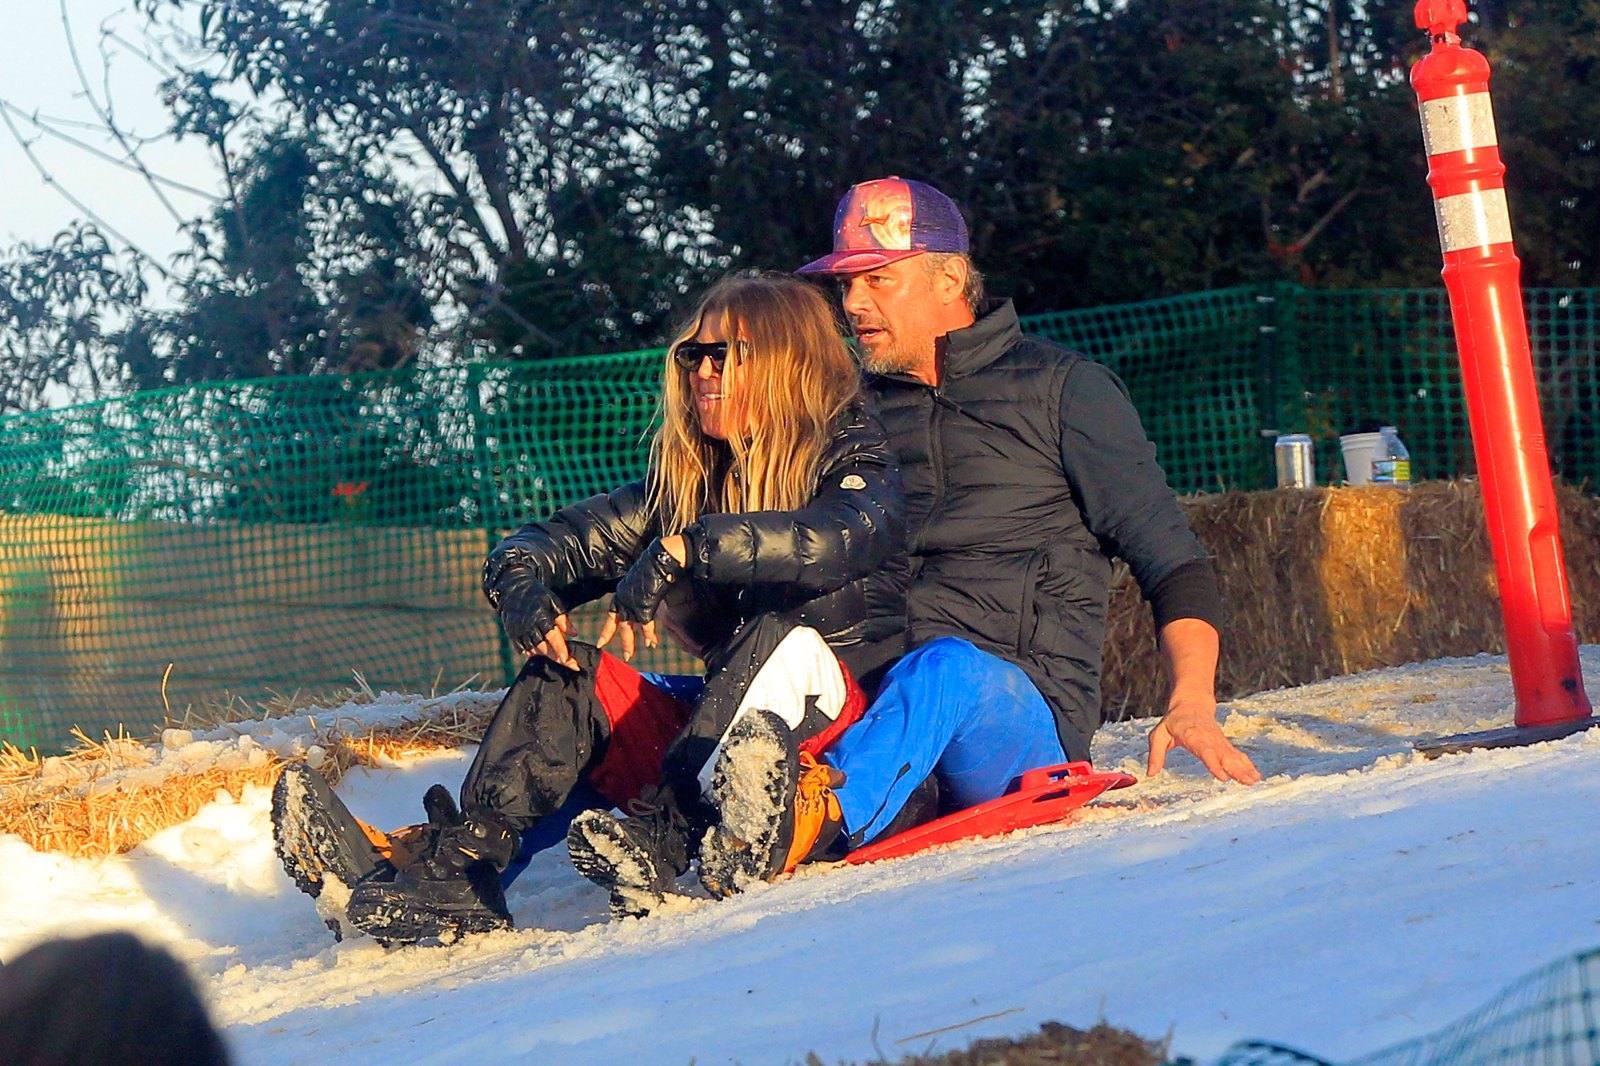 Josh Duhamel, Fergie Reunite for Snow Day With Son Axl